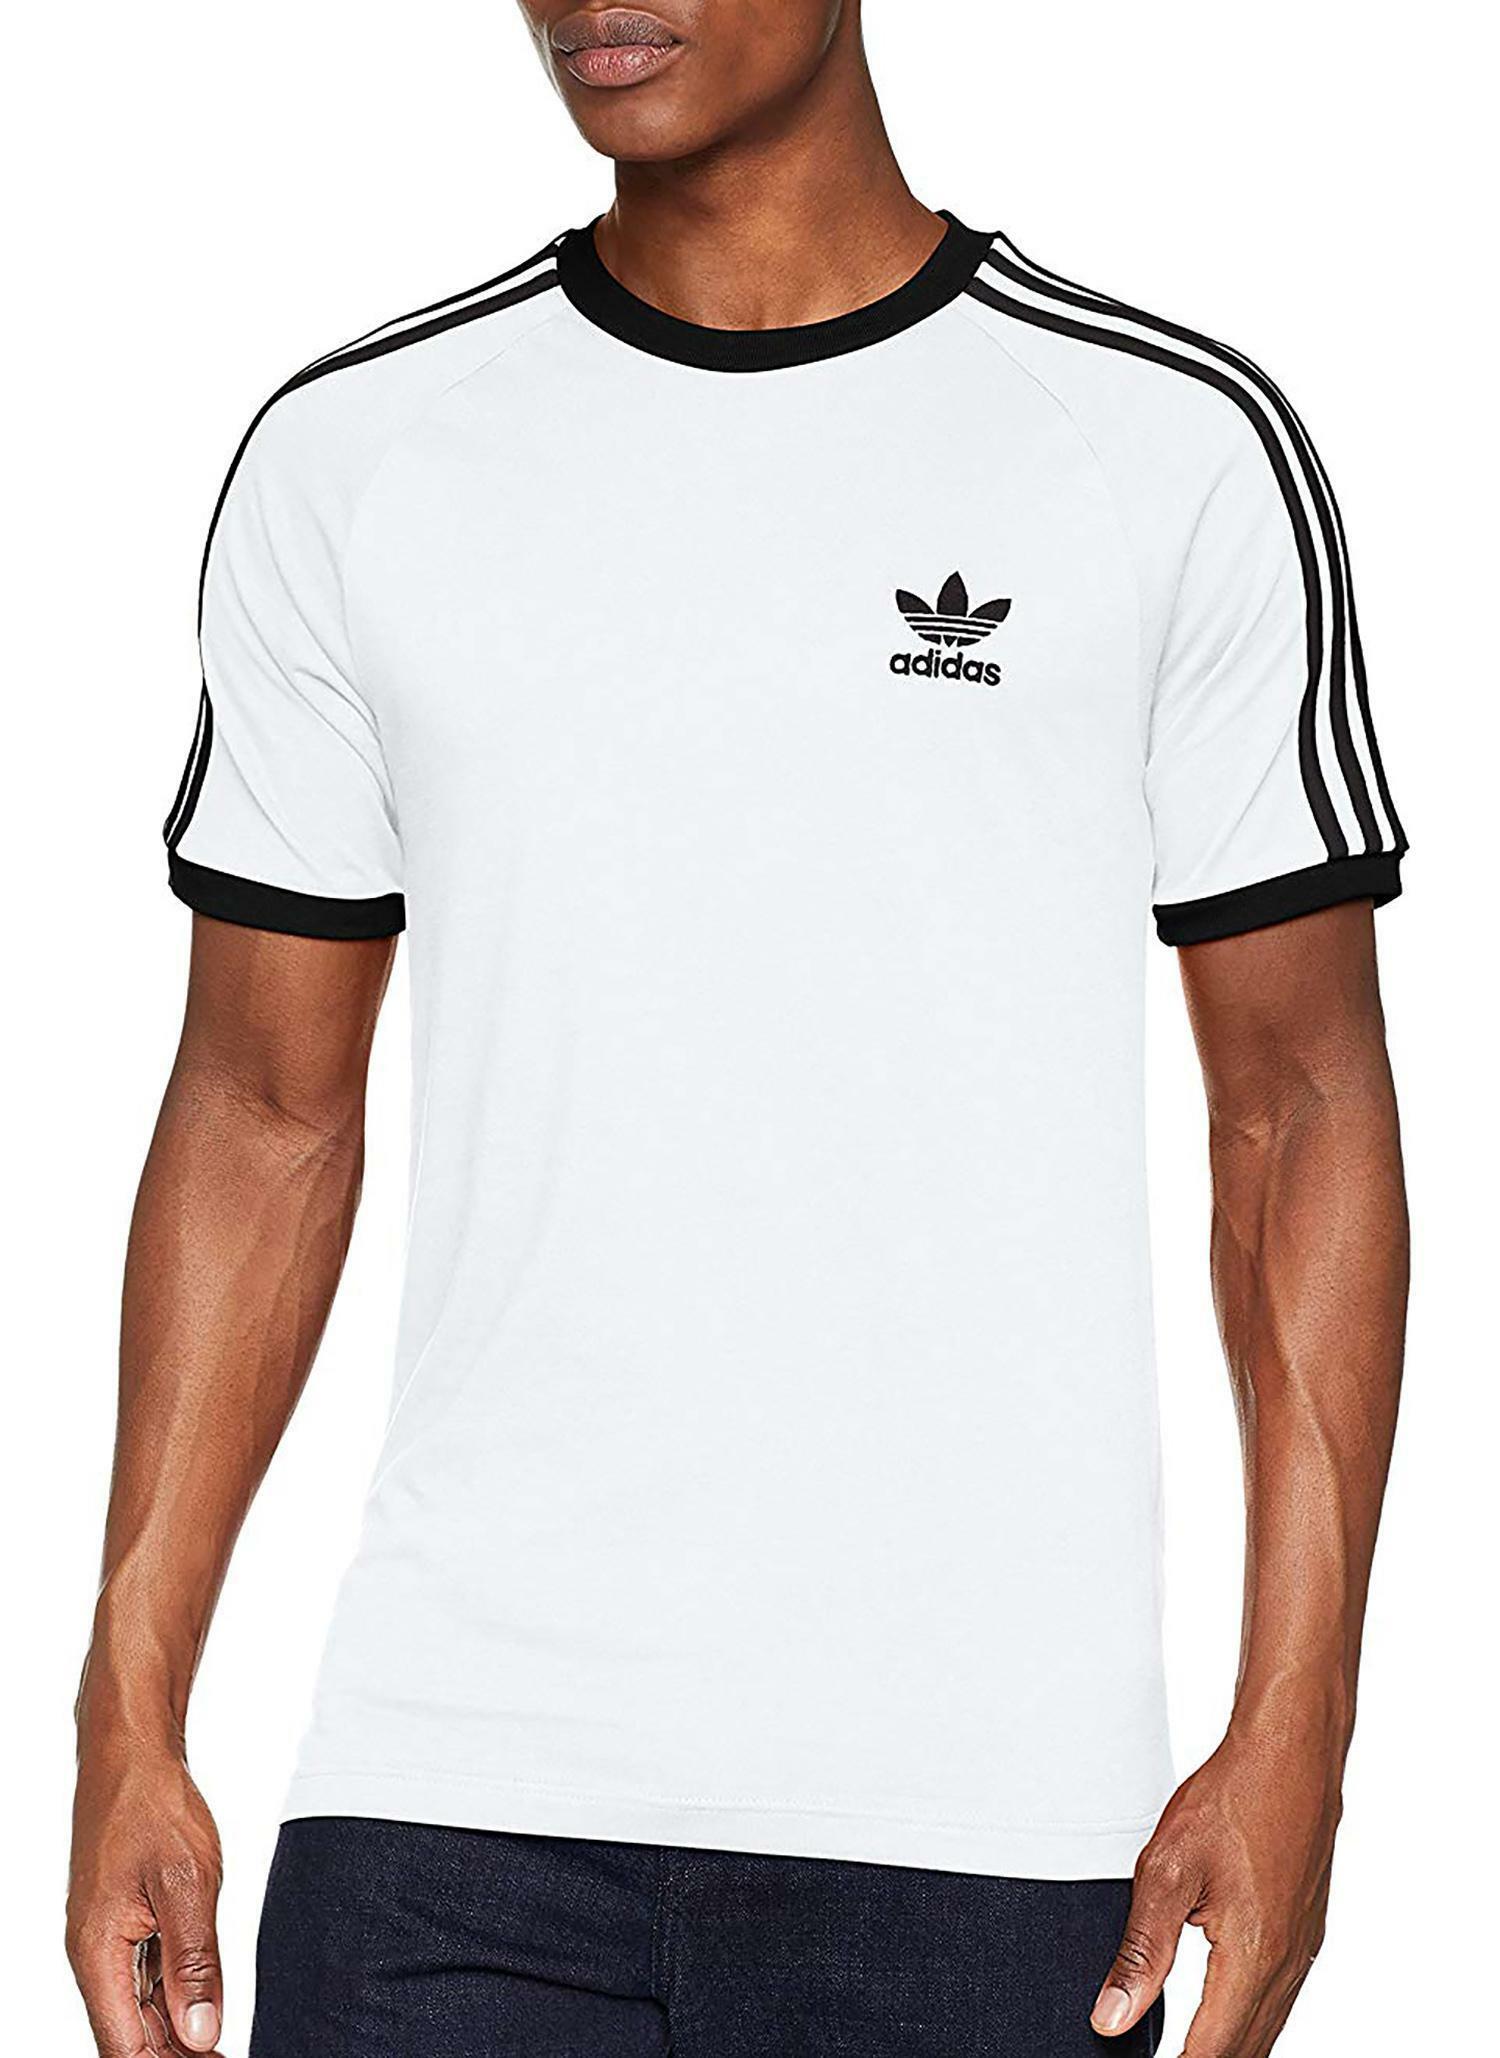 adidas adidas 3-stripes tee t-shirt uomo bianca cw1203